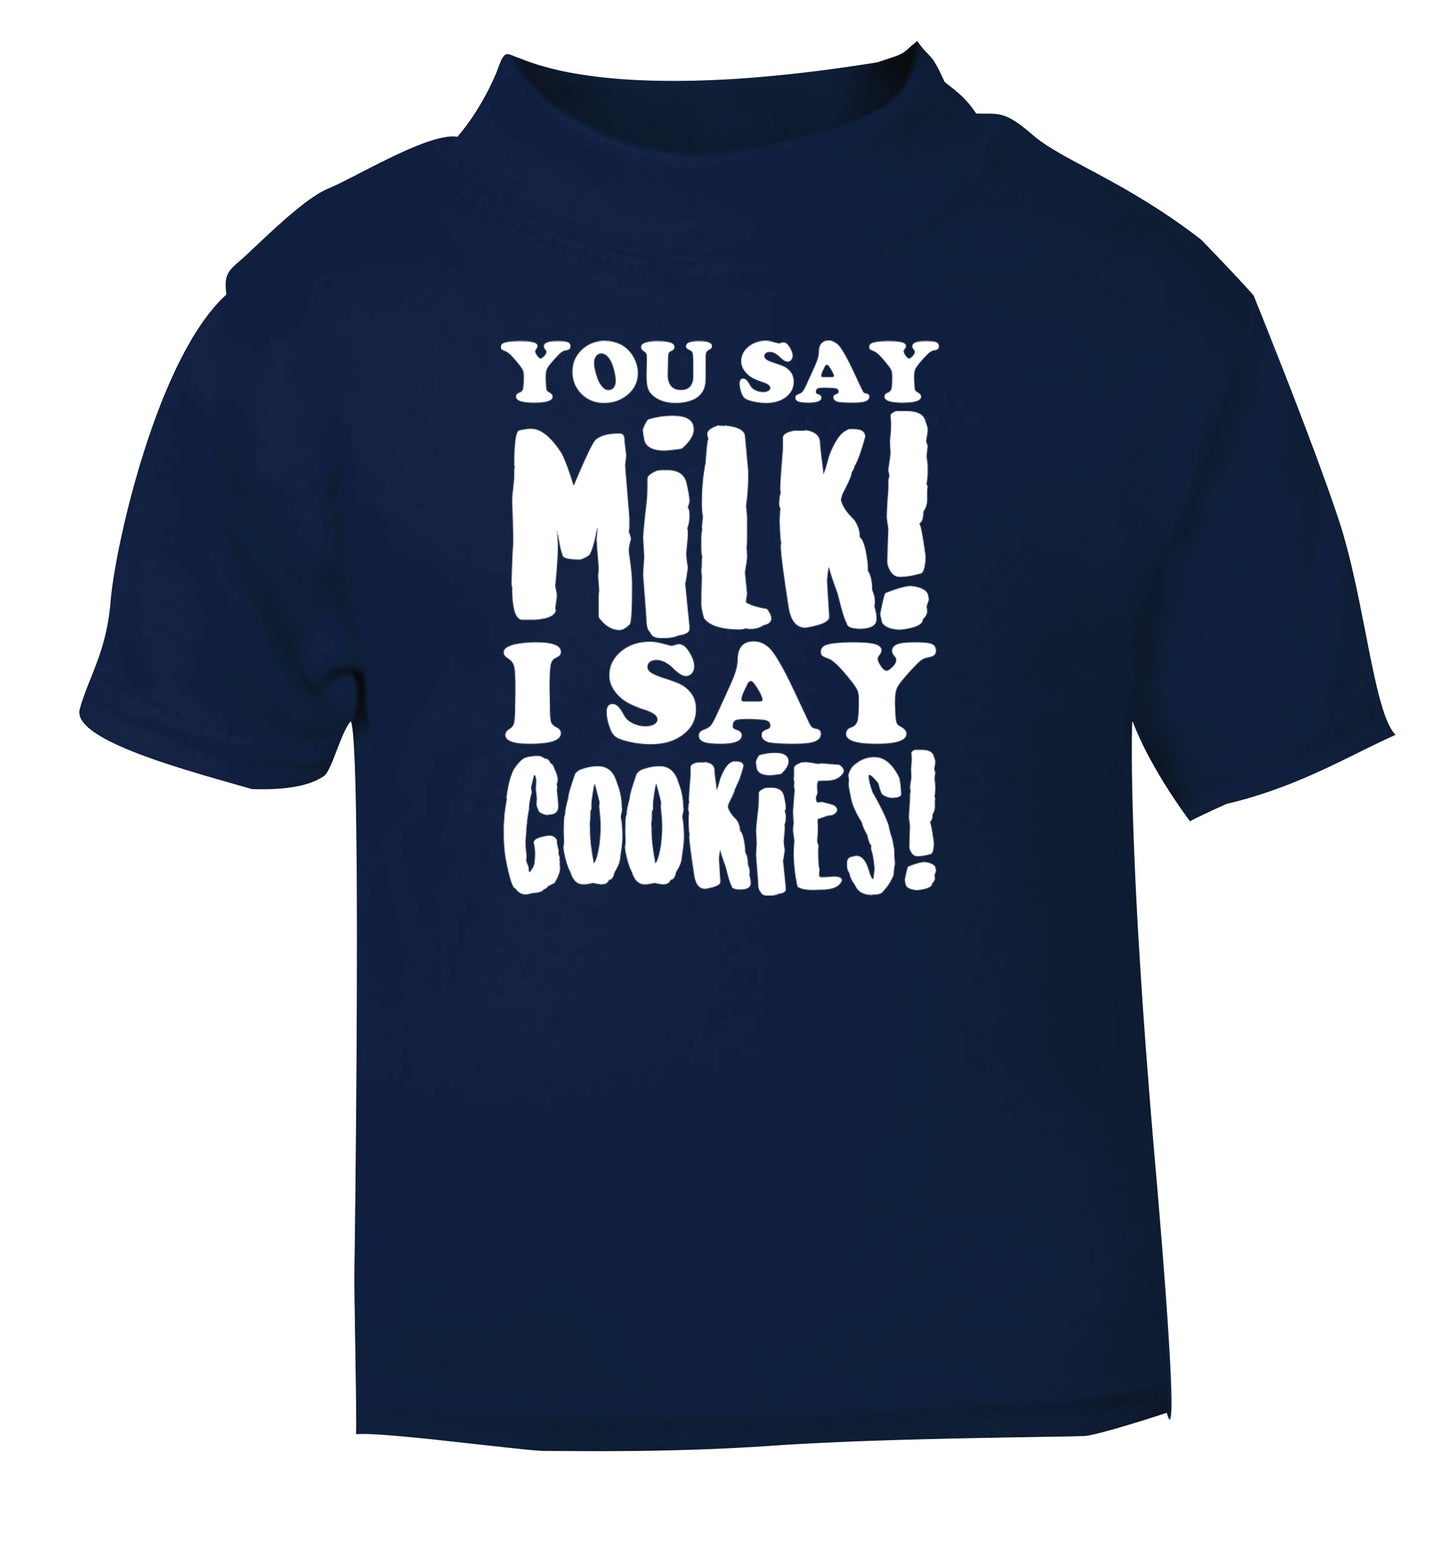 You say milk I say cookies! navy Baby Toddler Tshirt 2 Years